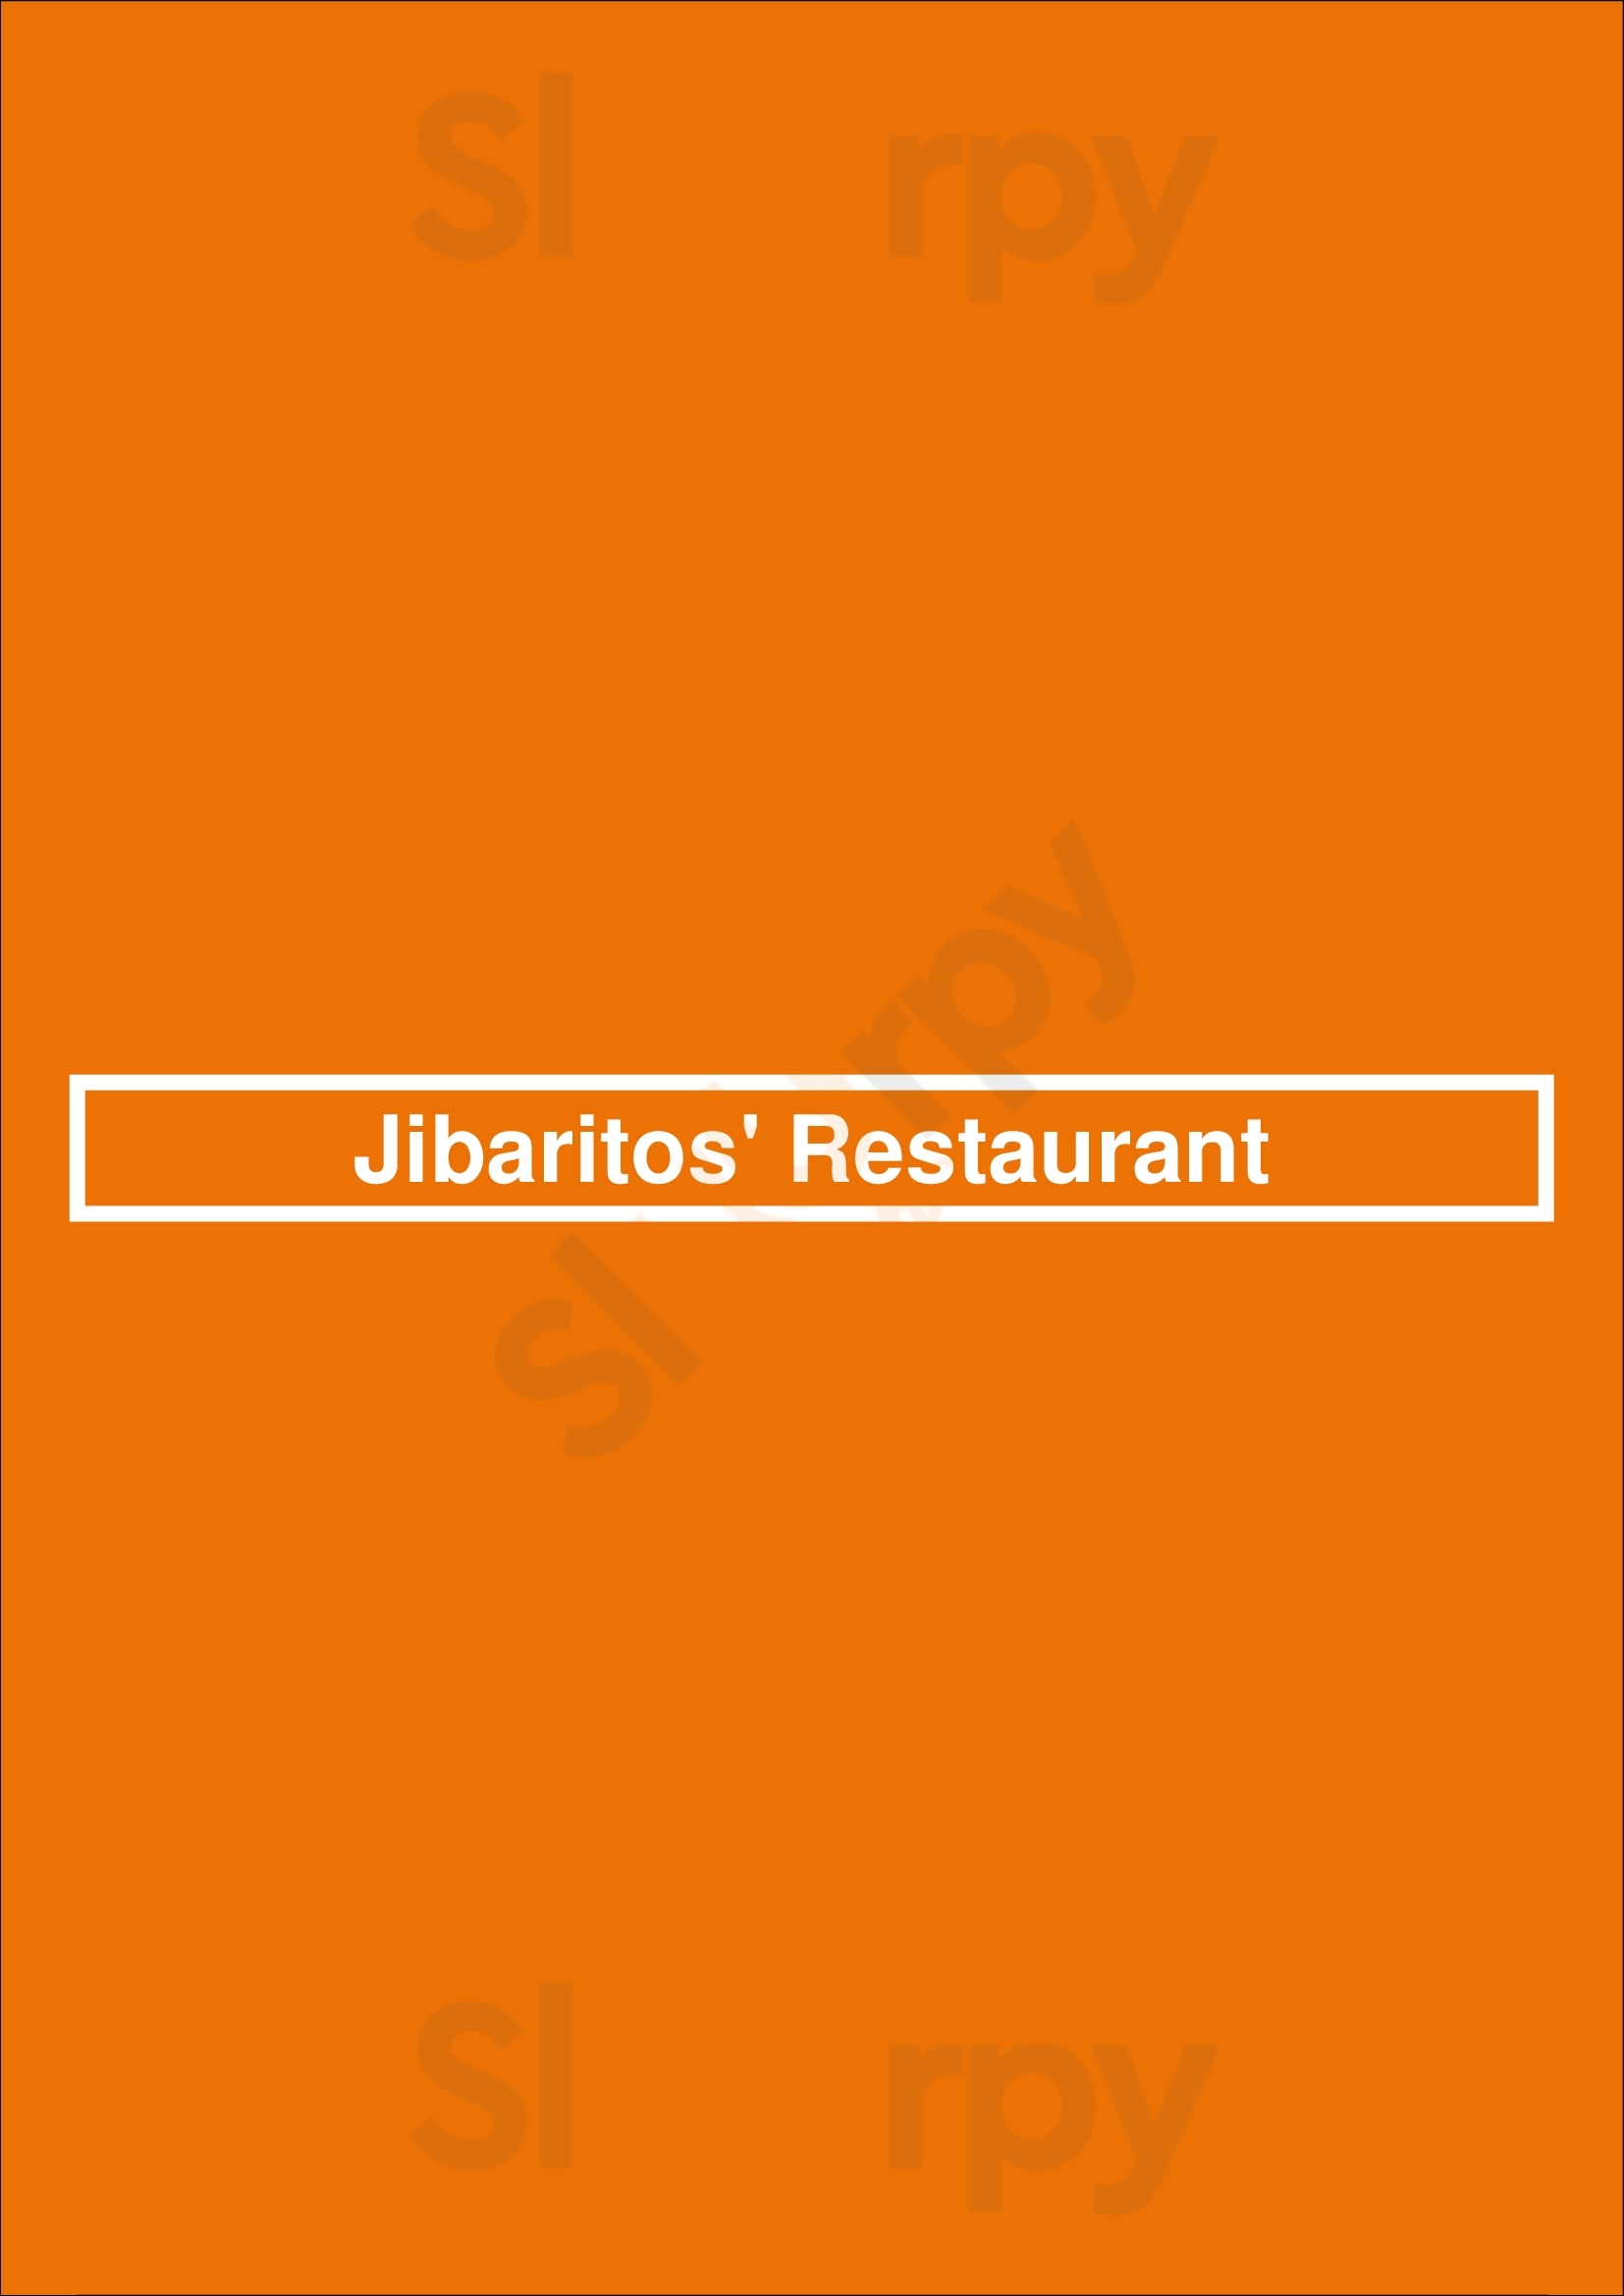 Jibaritos' Restaurant Bedford Menu - 1